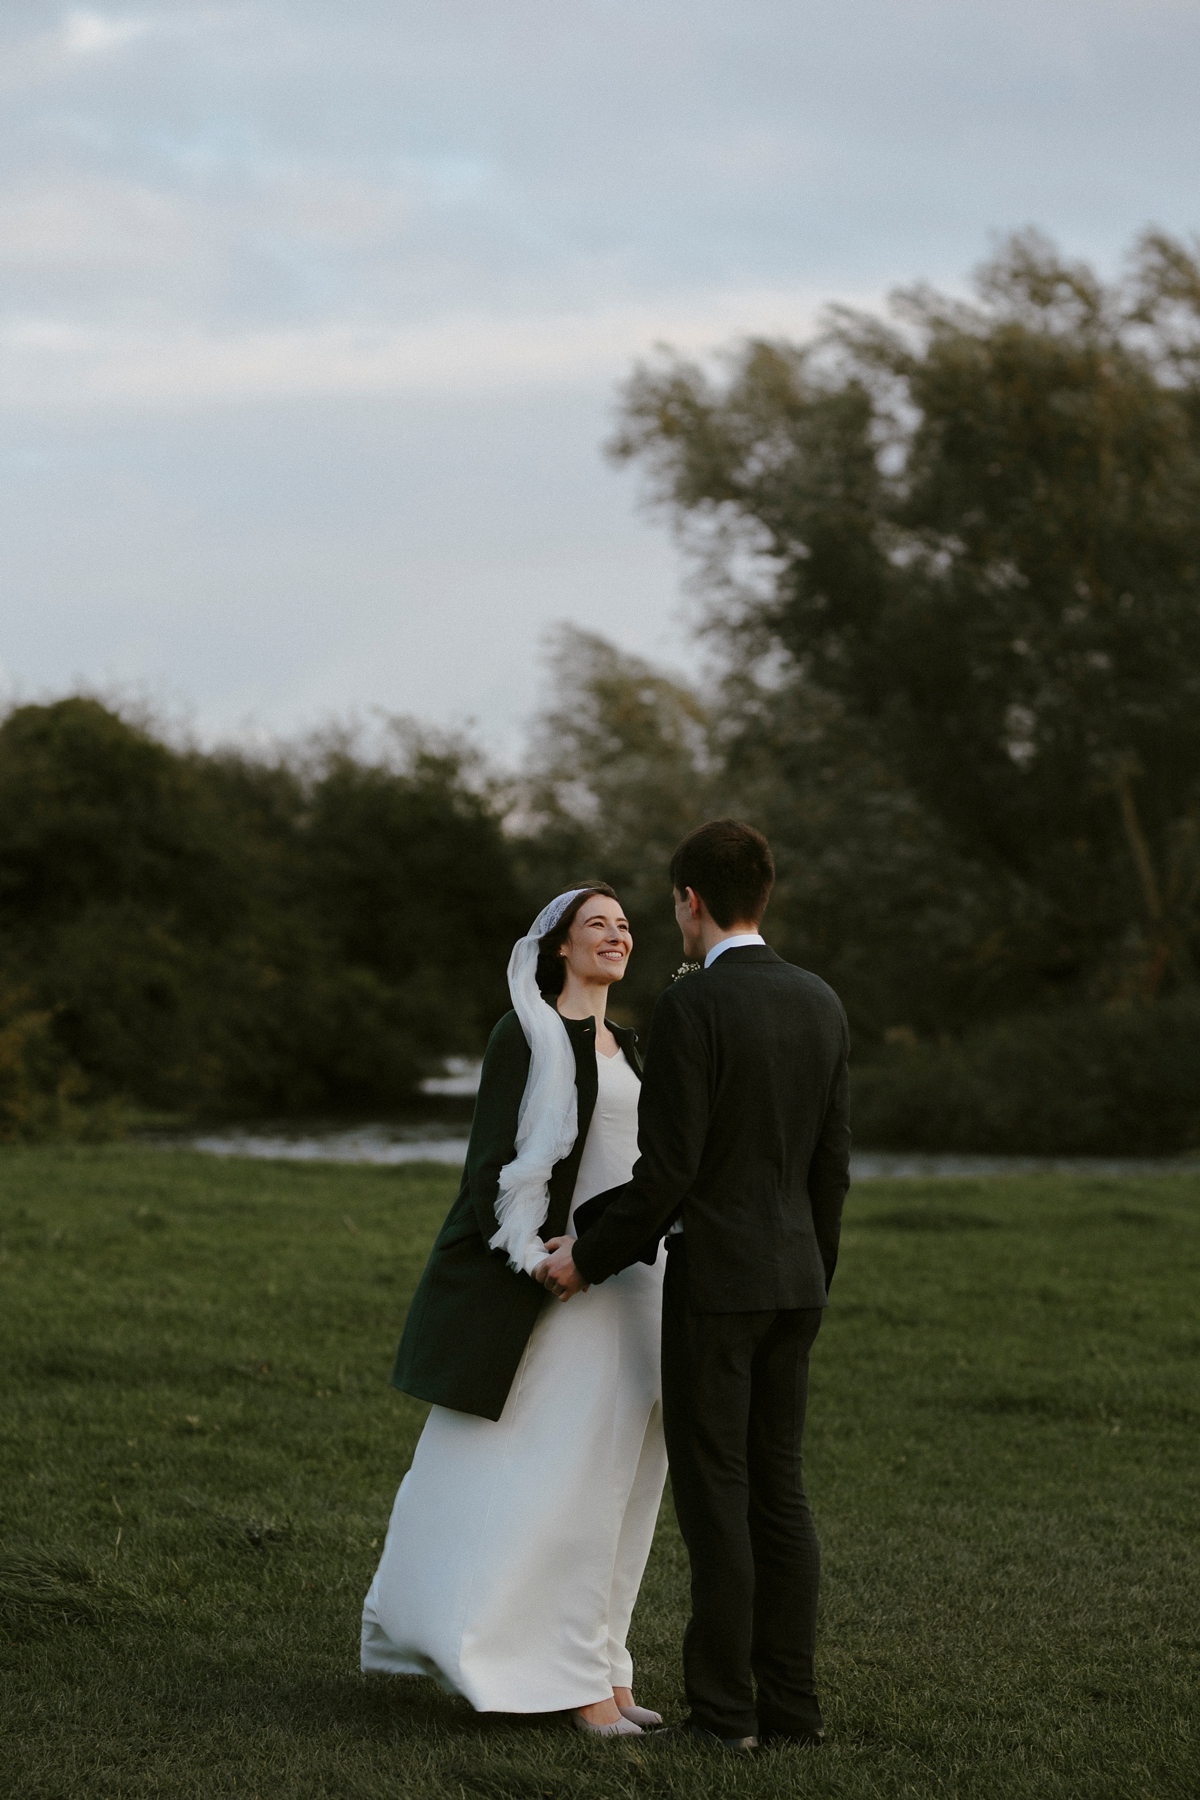 11 A bespoke long sleeved dress and vintage Whistles coat for an effotlessly elegant Cambridge wedding